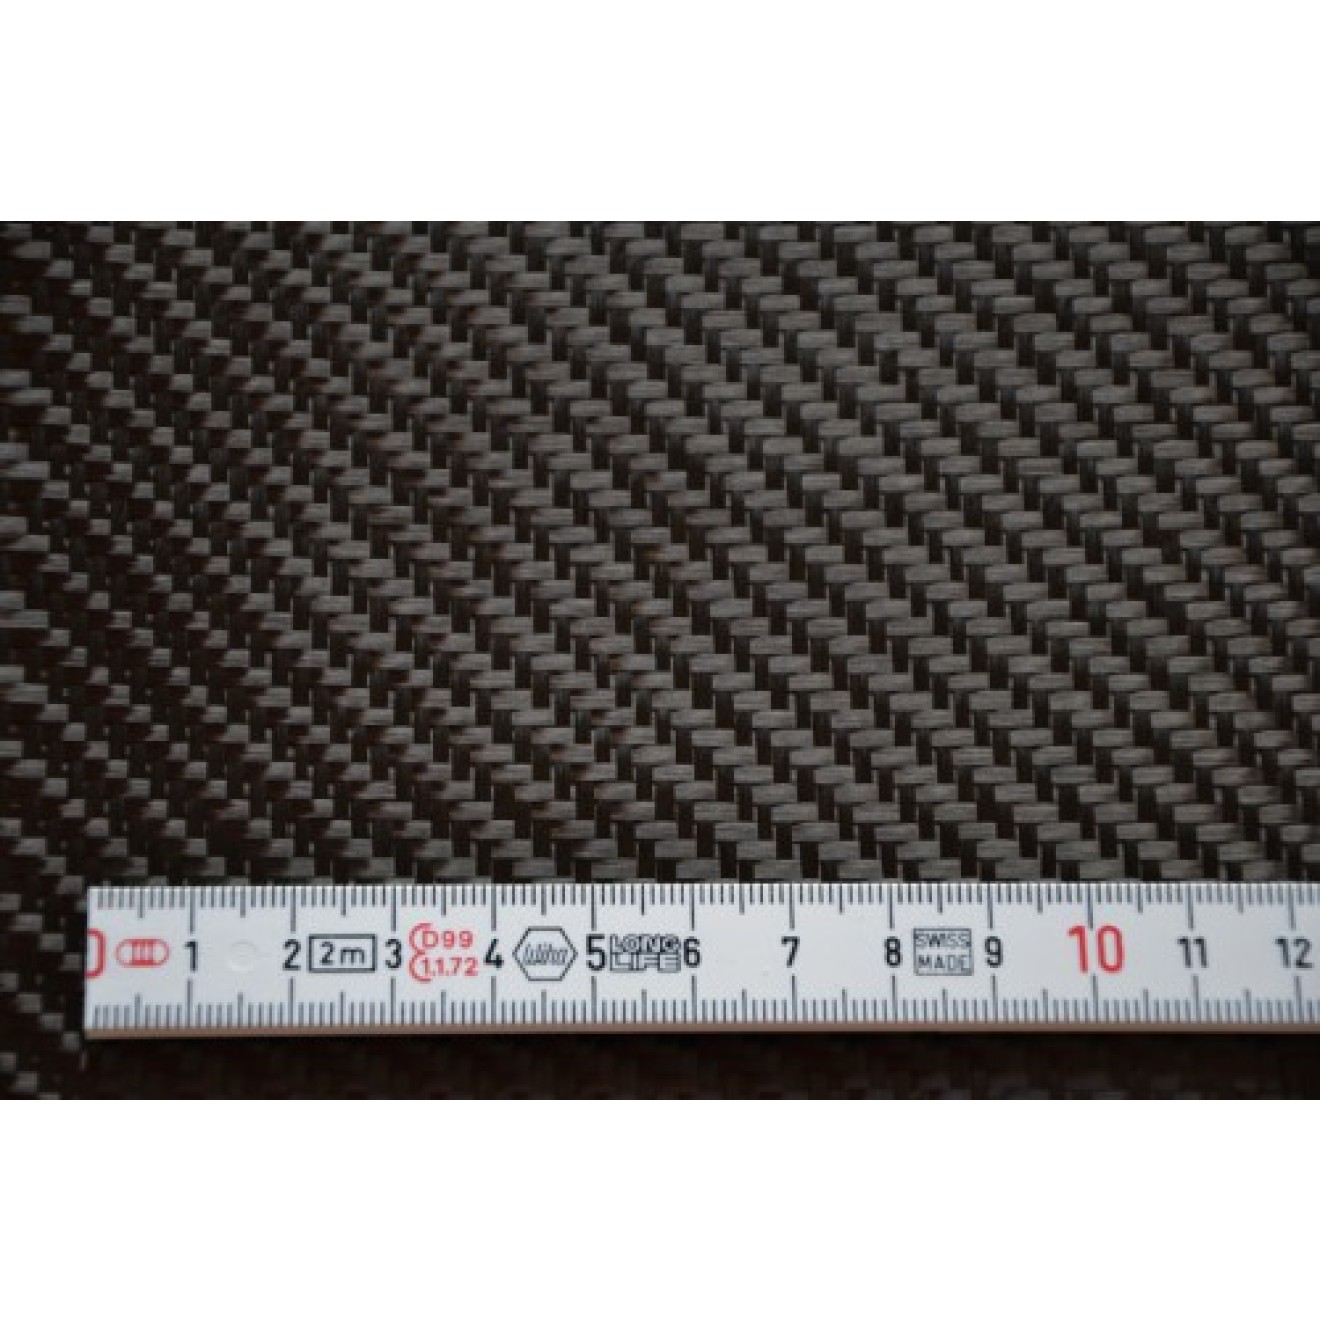 Woven carbon fiber fabric 3K 200g/m² twill2/2, roll length 25m